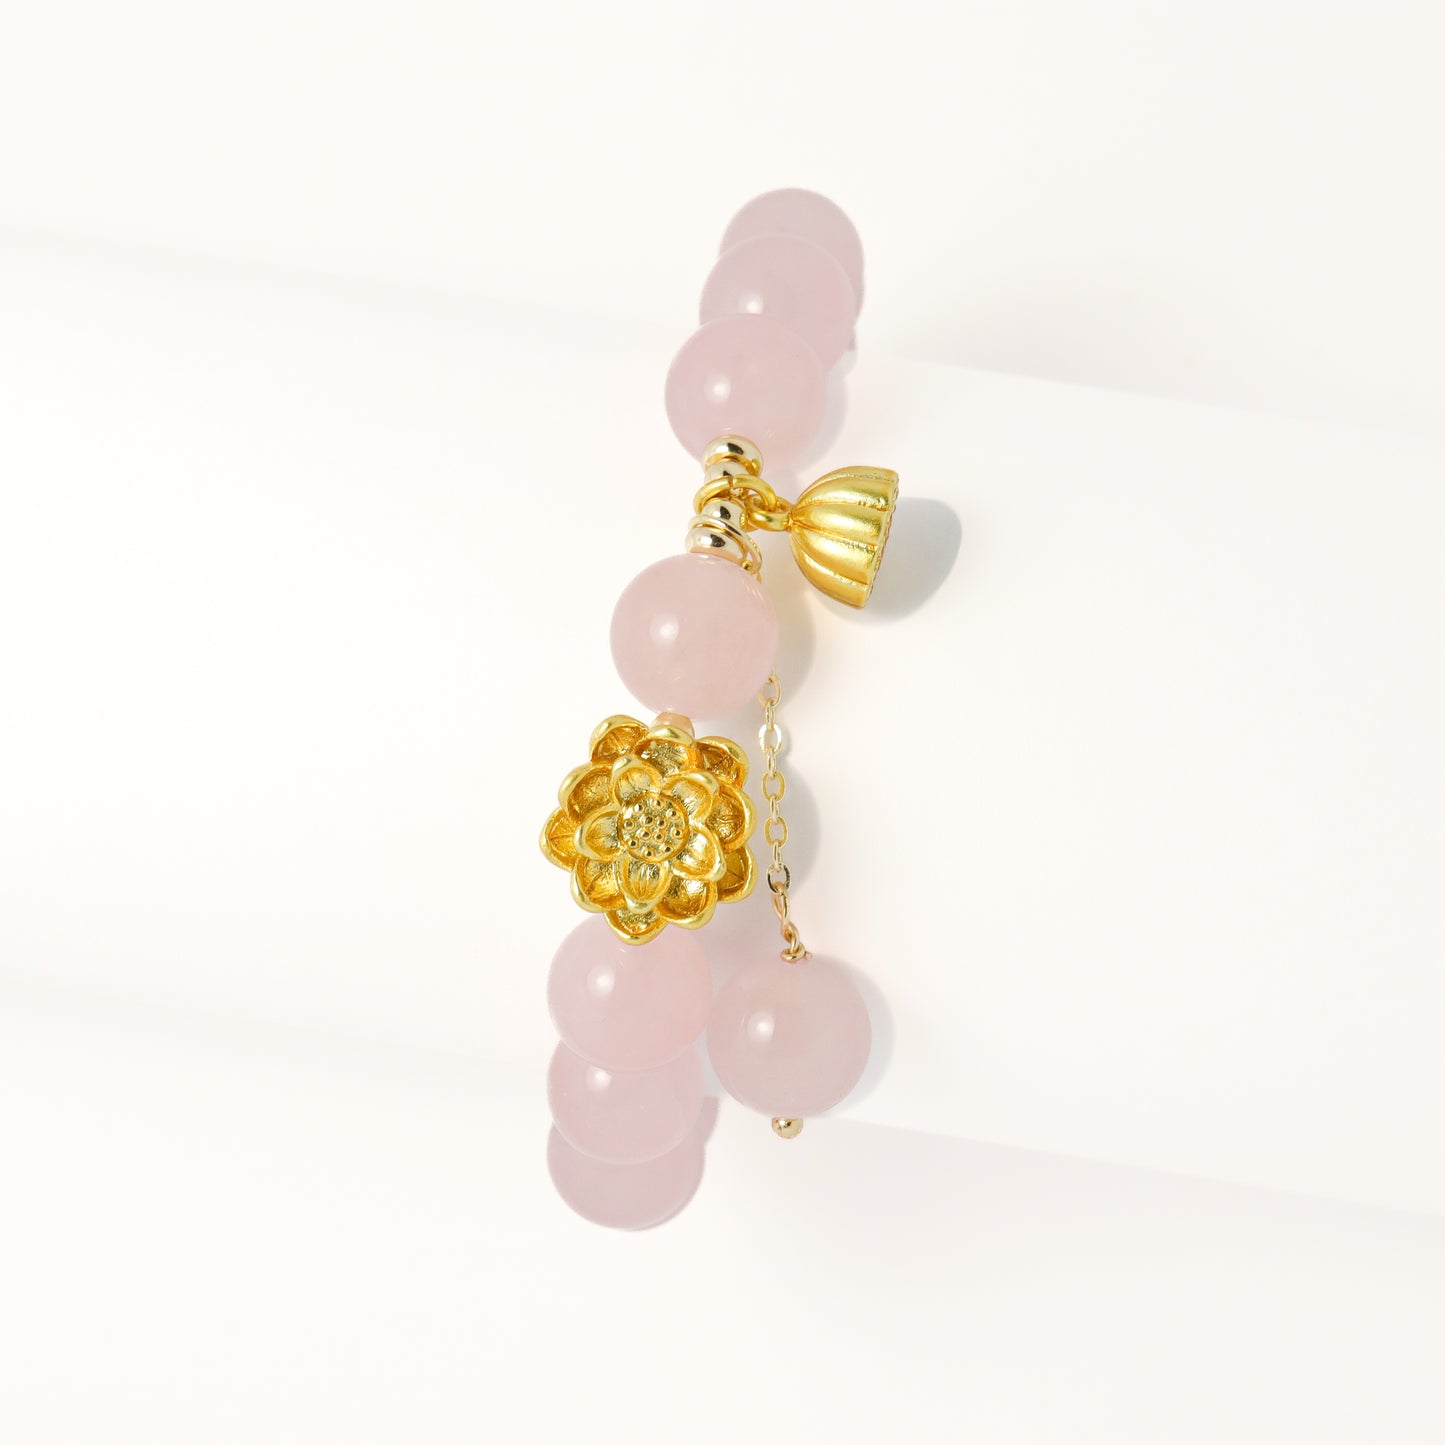 Astraea Goddess II - Lotus Rose Quartz Bracelet